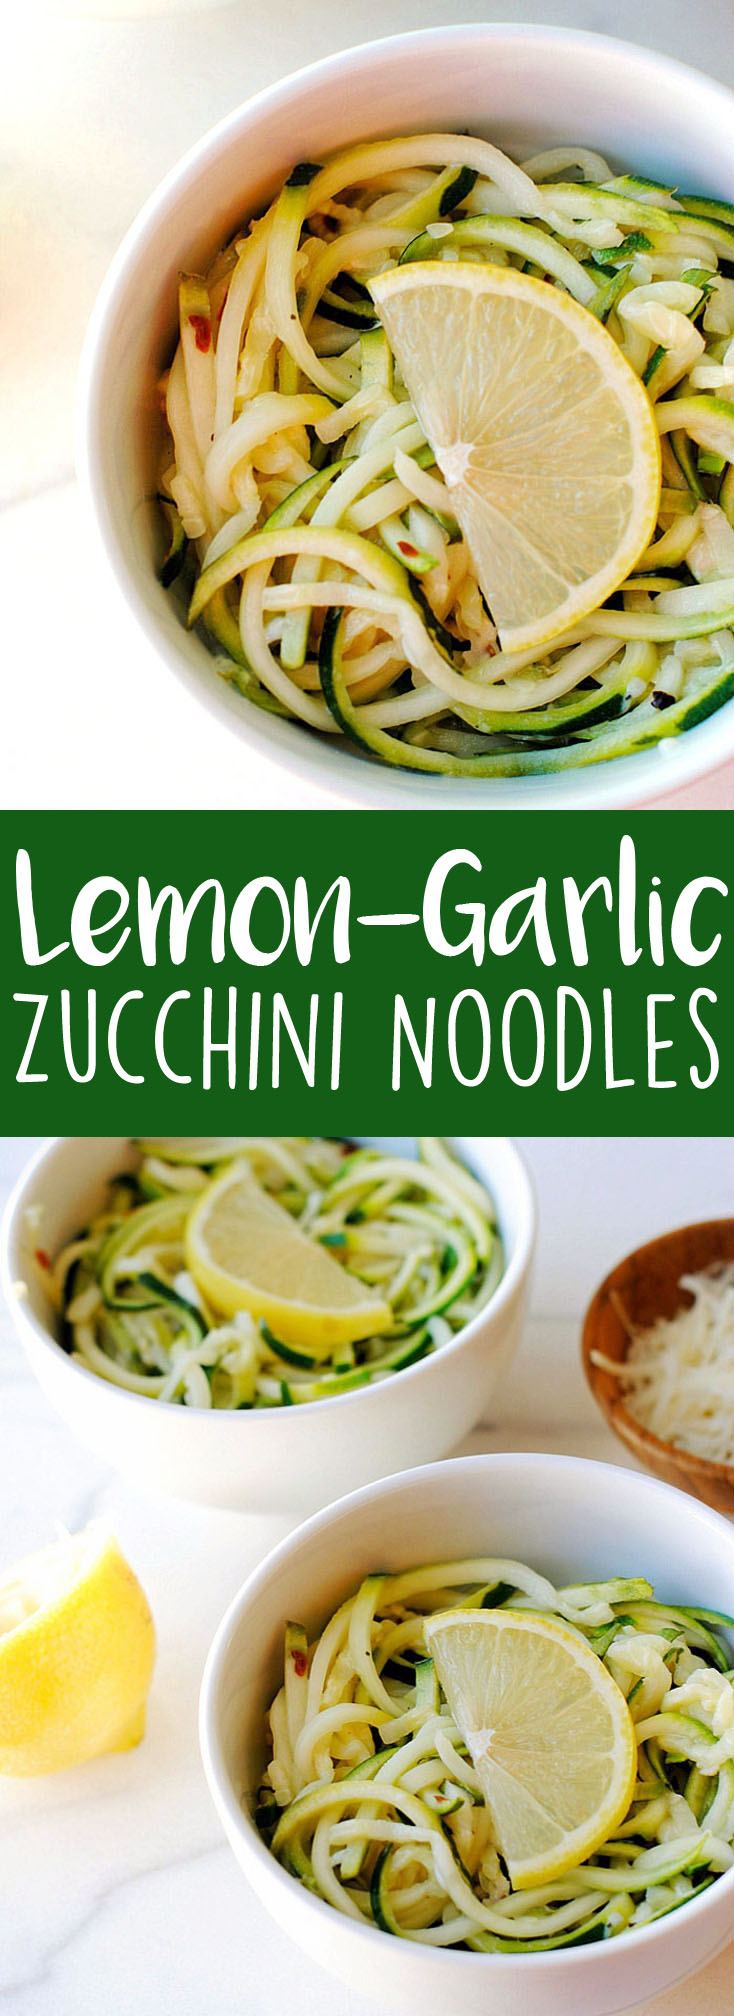 Lemon-Garlic Zucchini Noodles | Eat Yourself Skinny